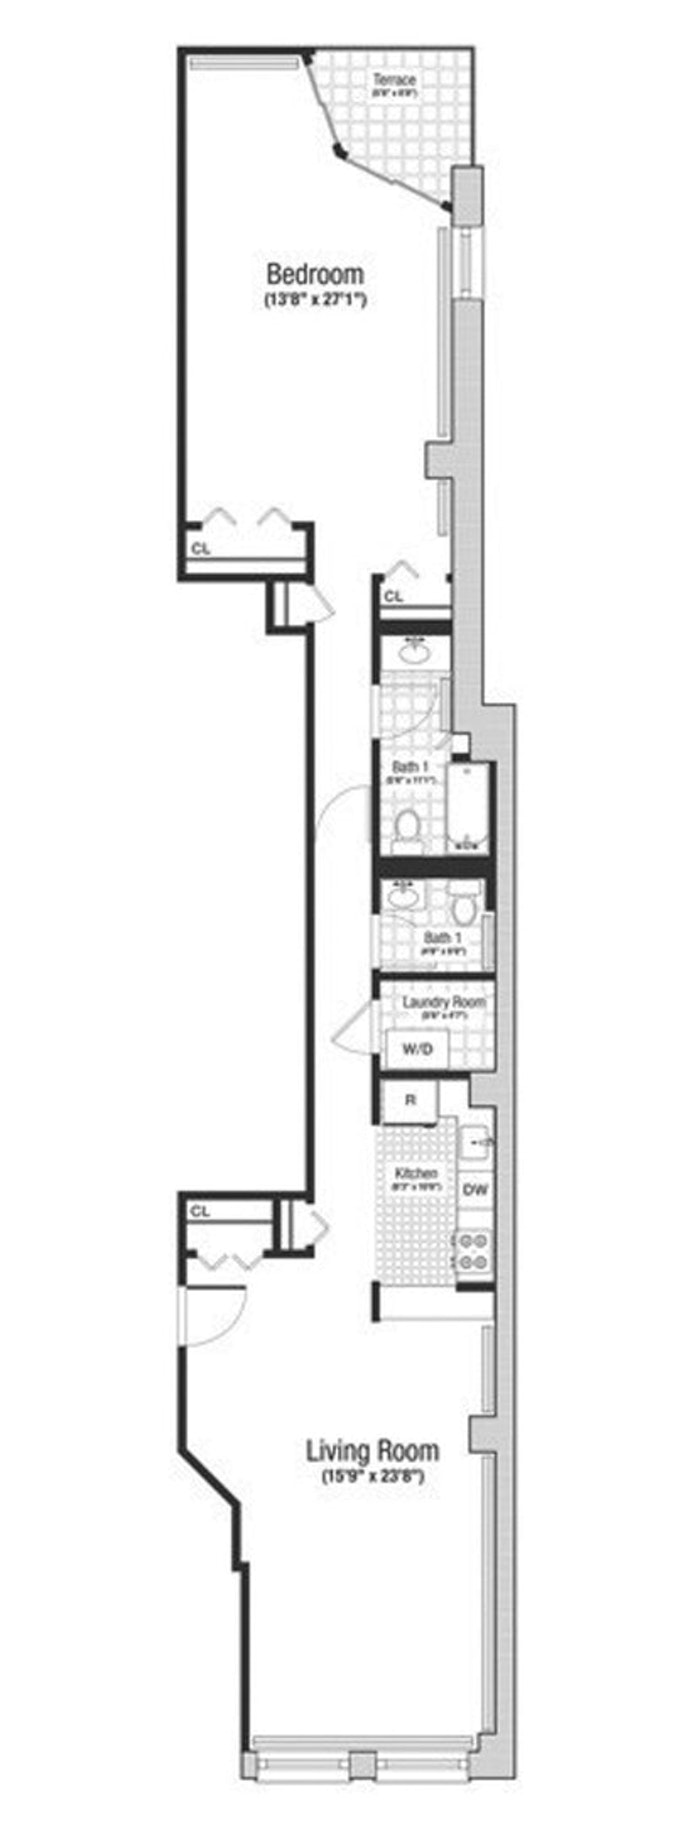 Floorplan for 36 Laight Street, 5A